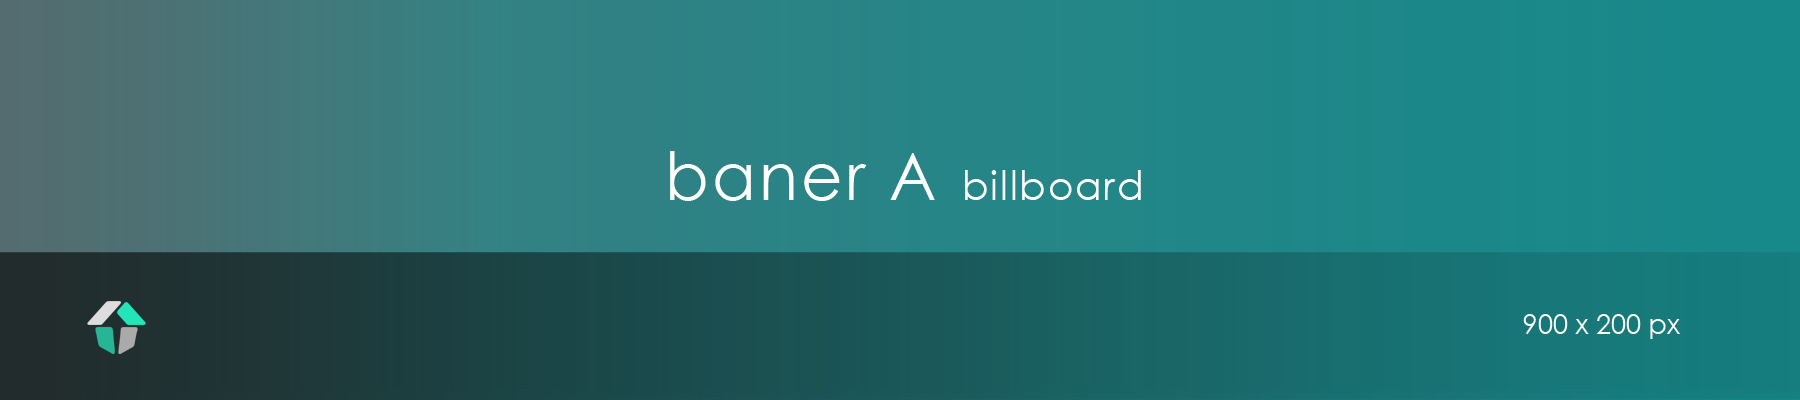 Baner A Billboard - Reklama - Przegląd Domowy